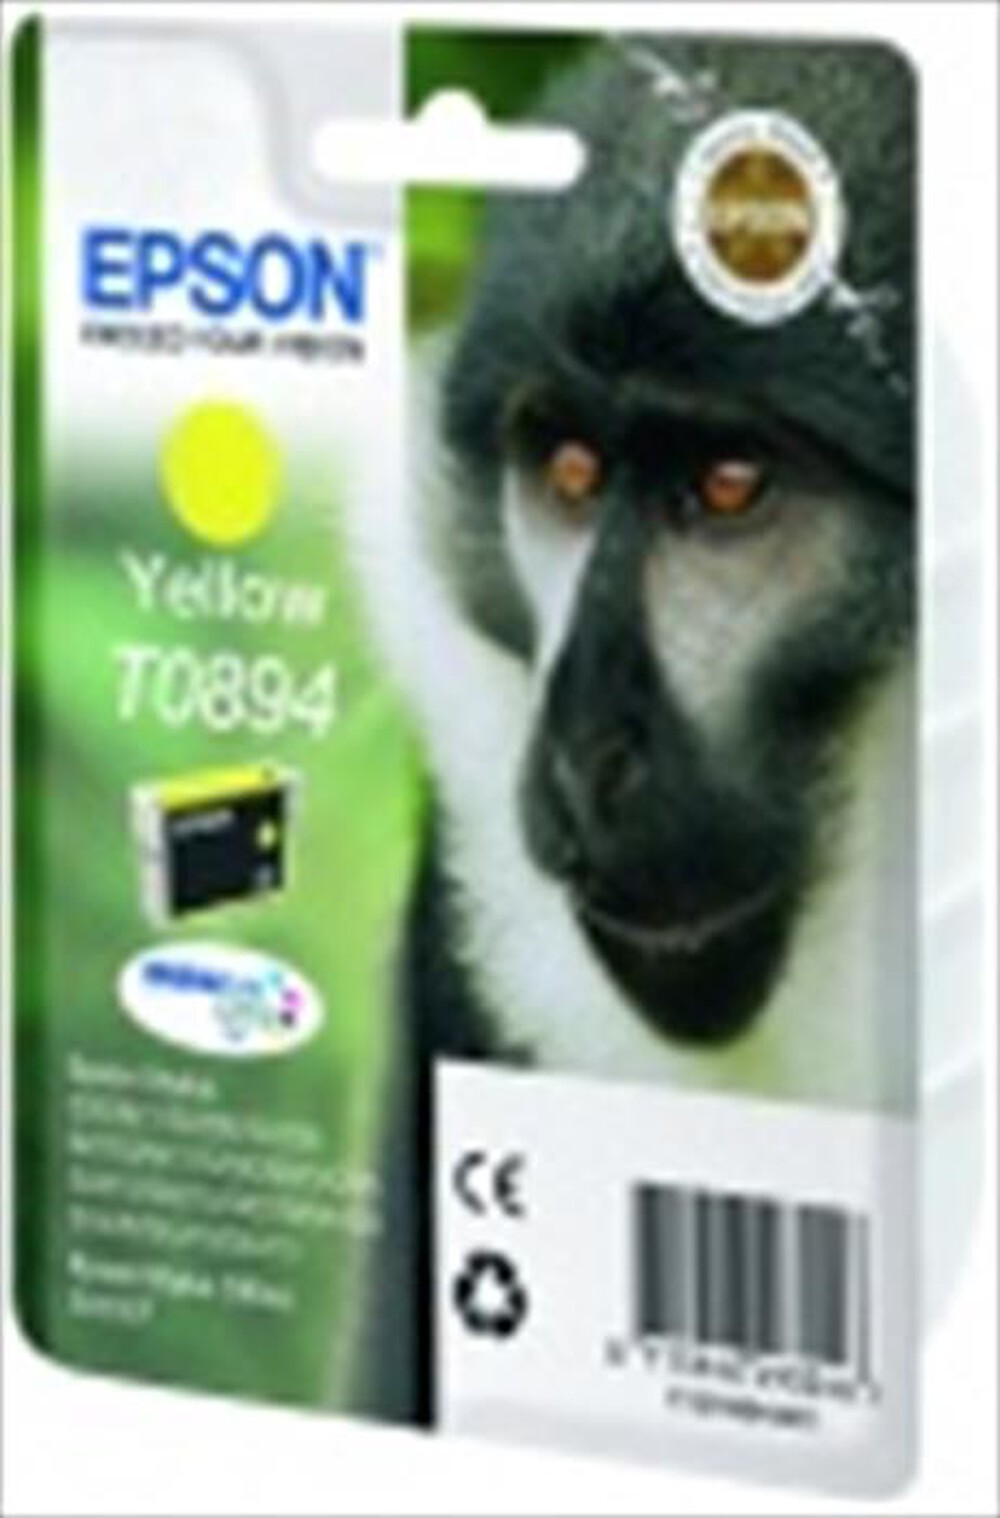 "EPSON - Cartuccia inchiostro giallo C13T08944021-Giallo"